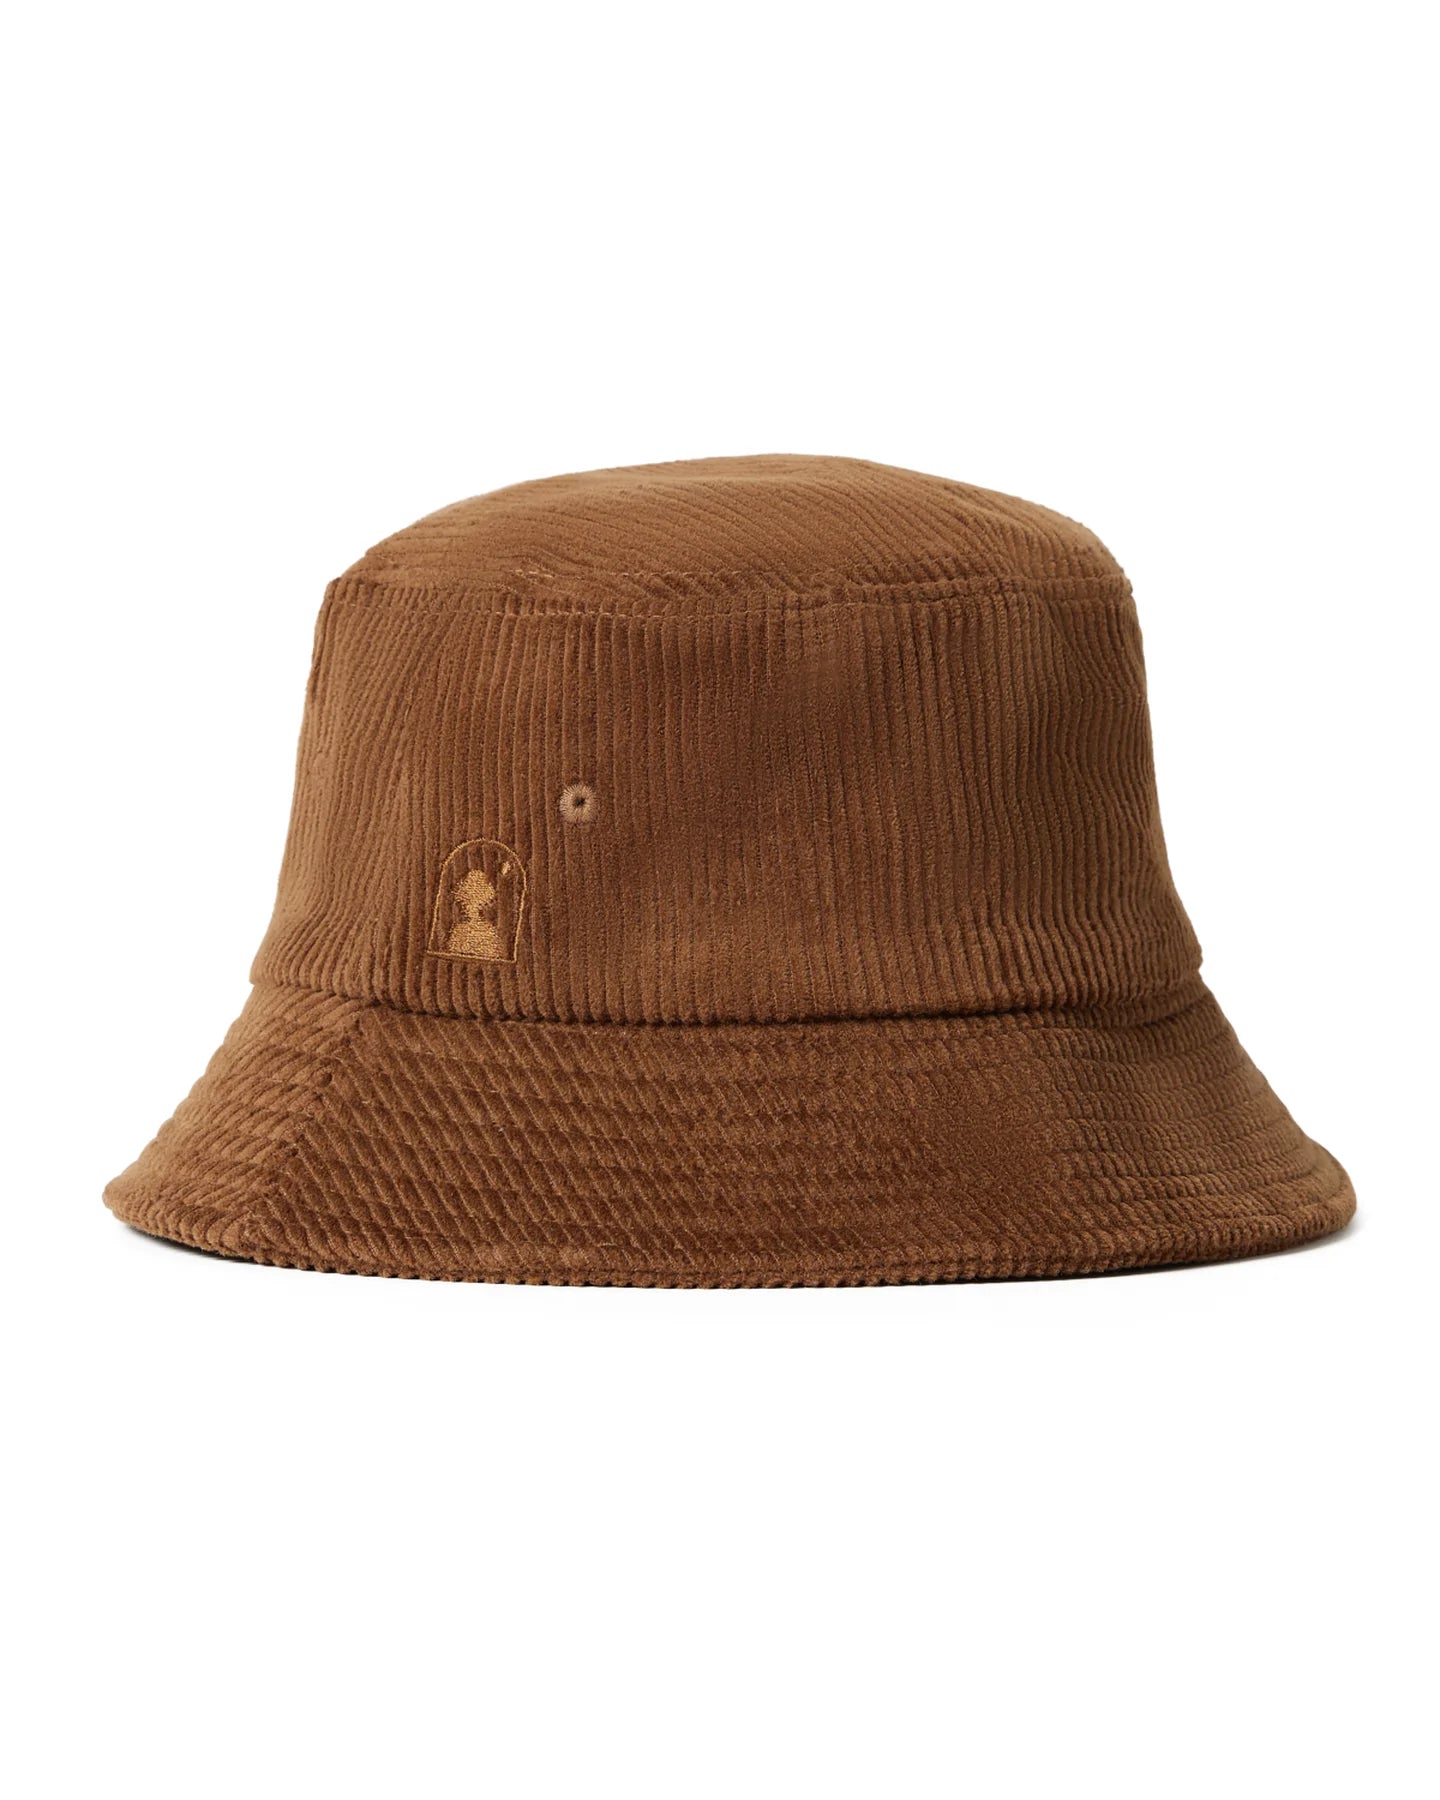 The Corsica Corduroy Bucket Hat - Carajillo S/M